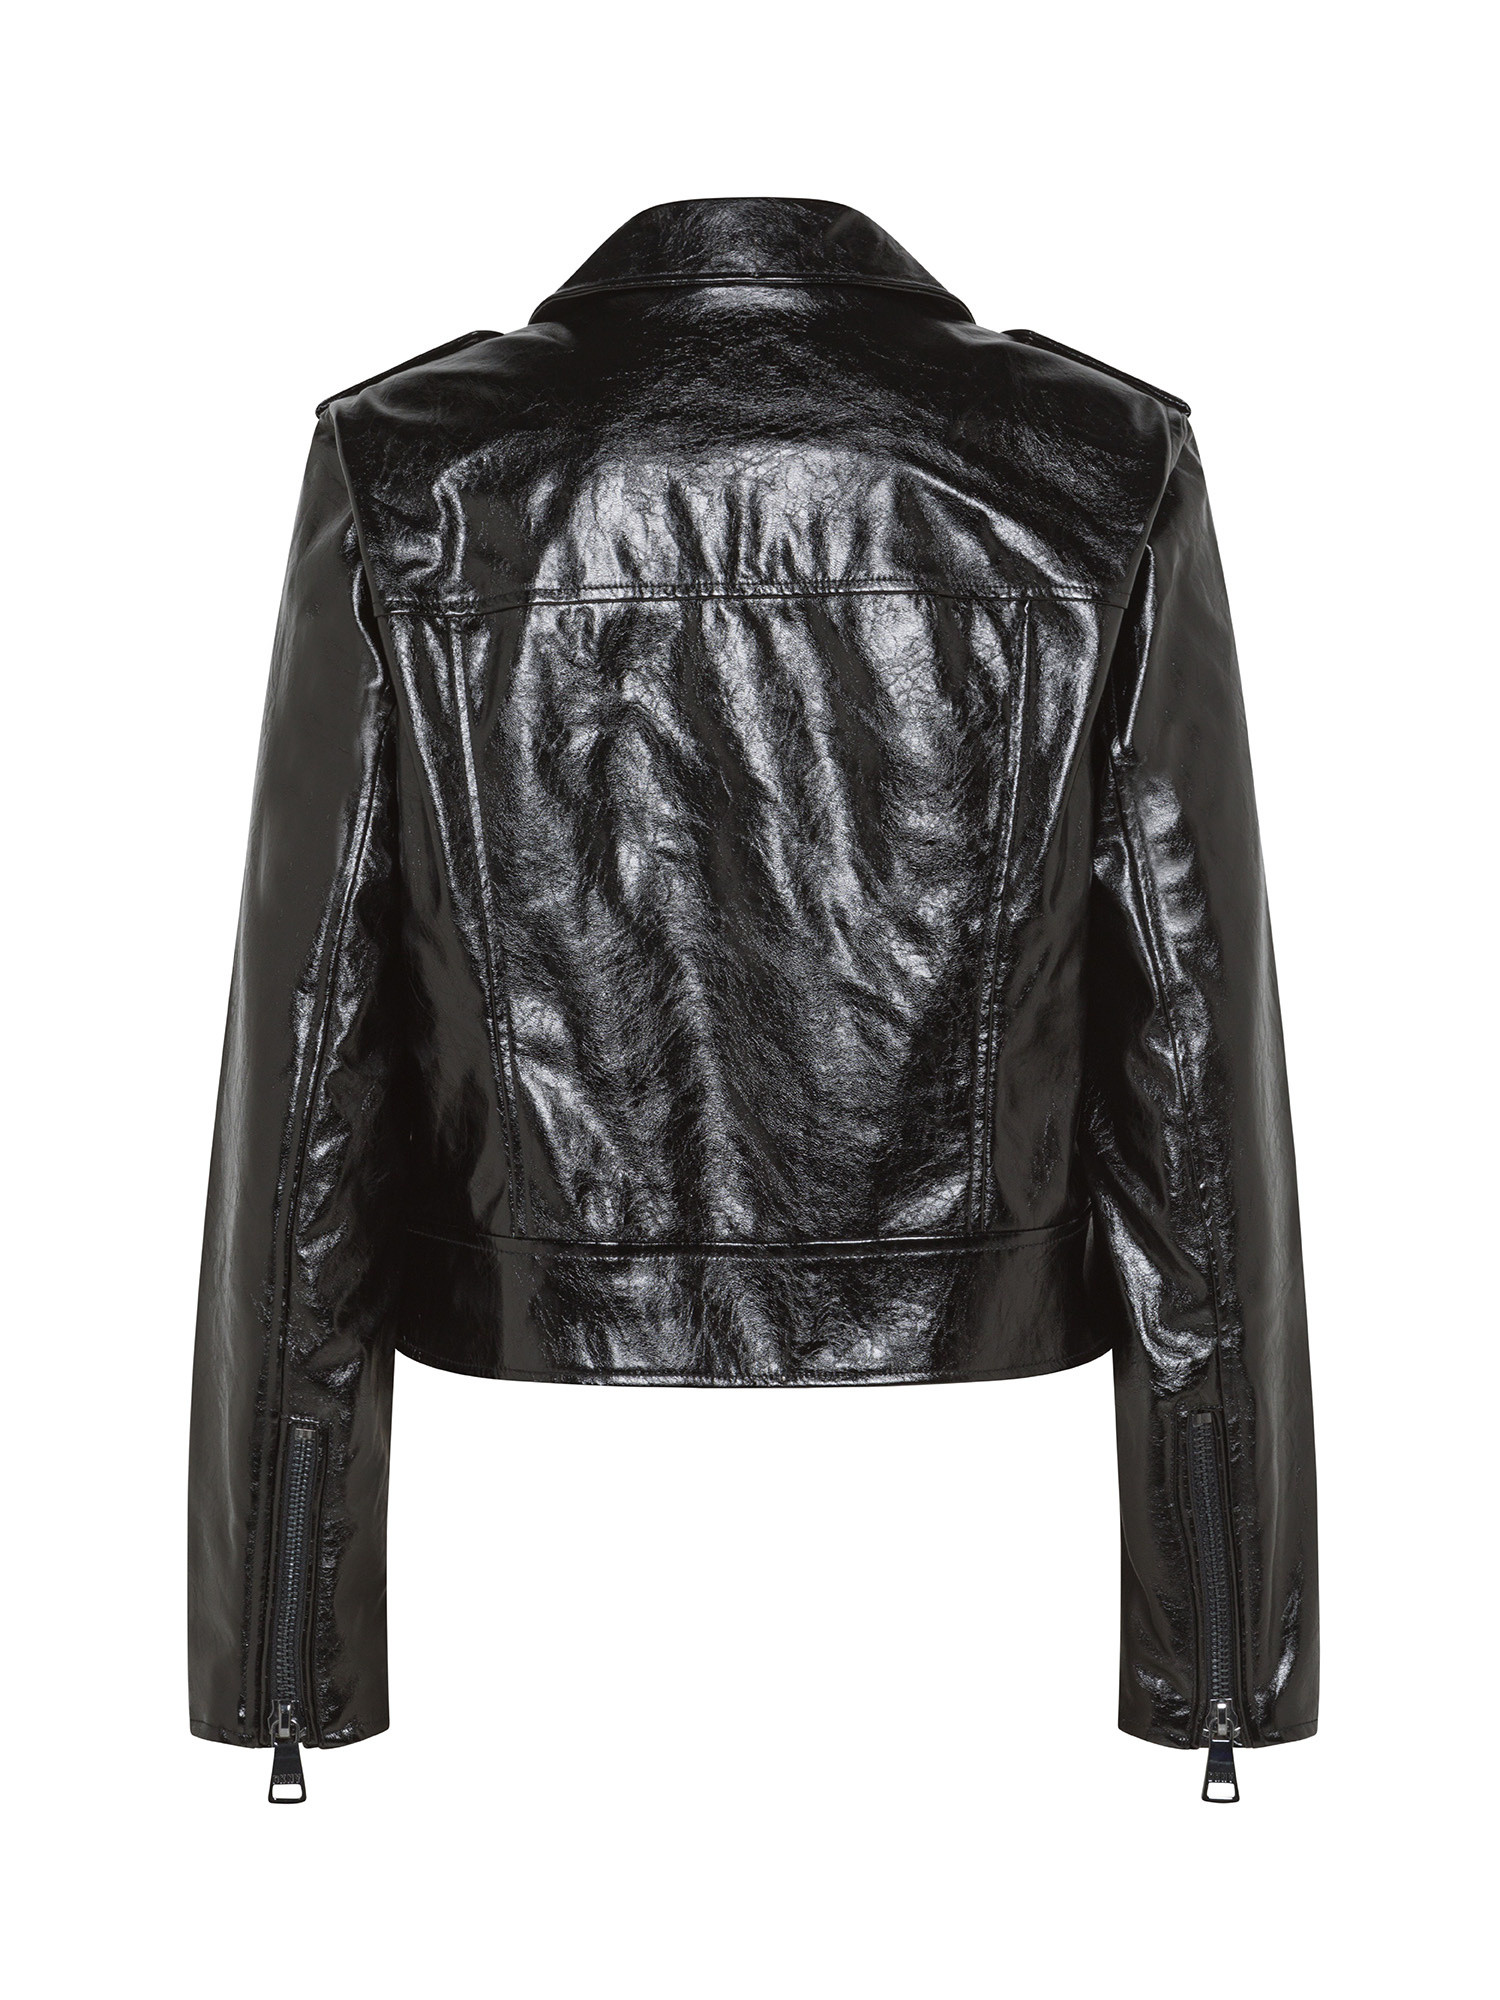 DKNY Vegan Leather Jacket, Black, large image number 1